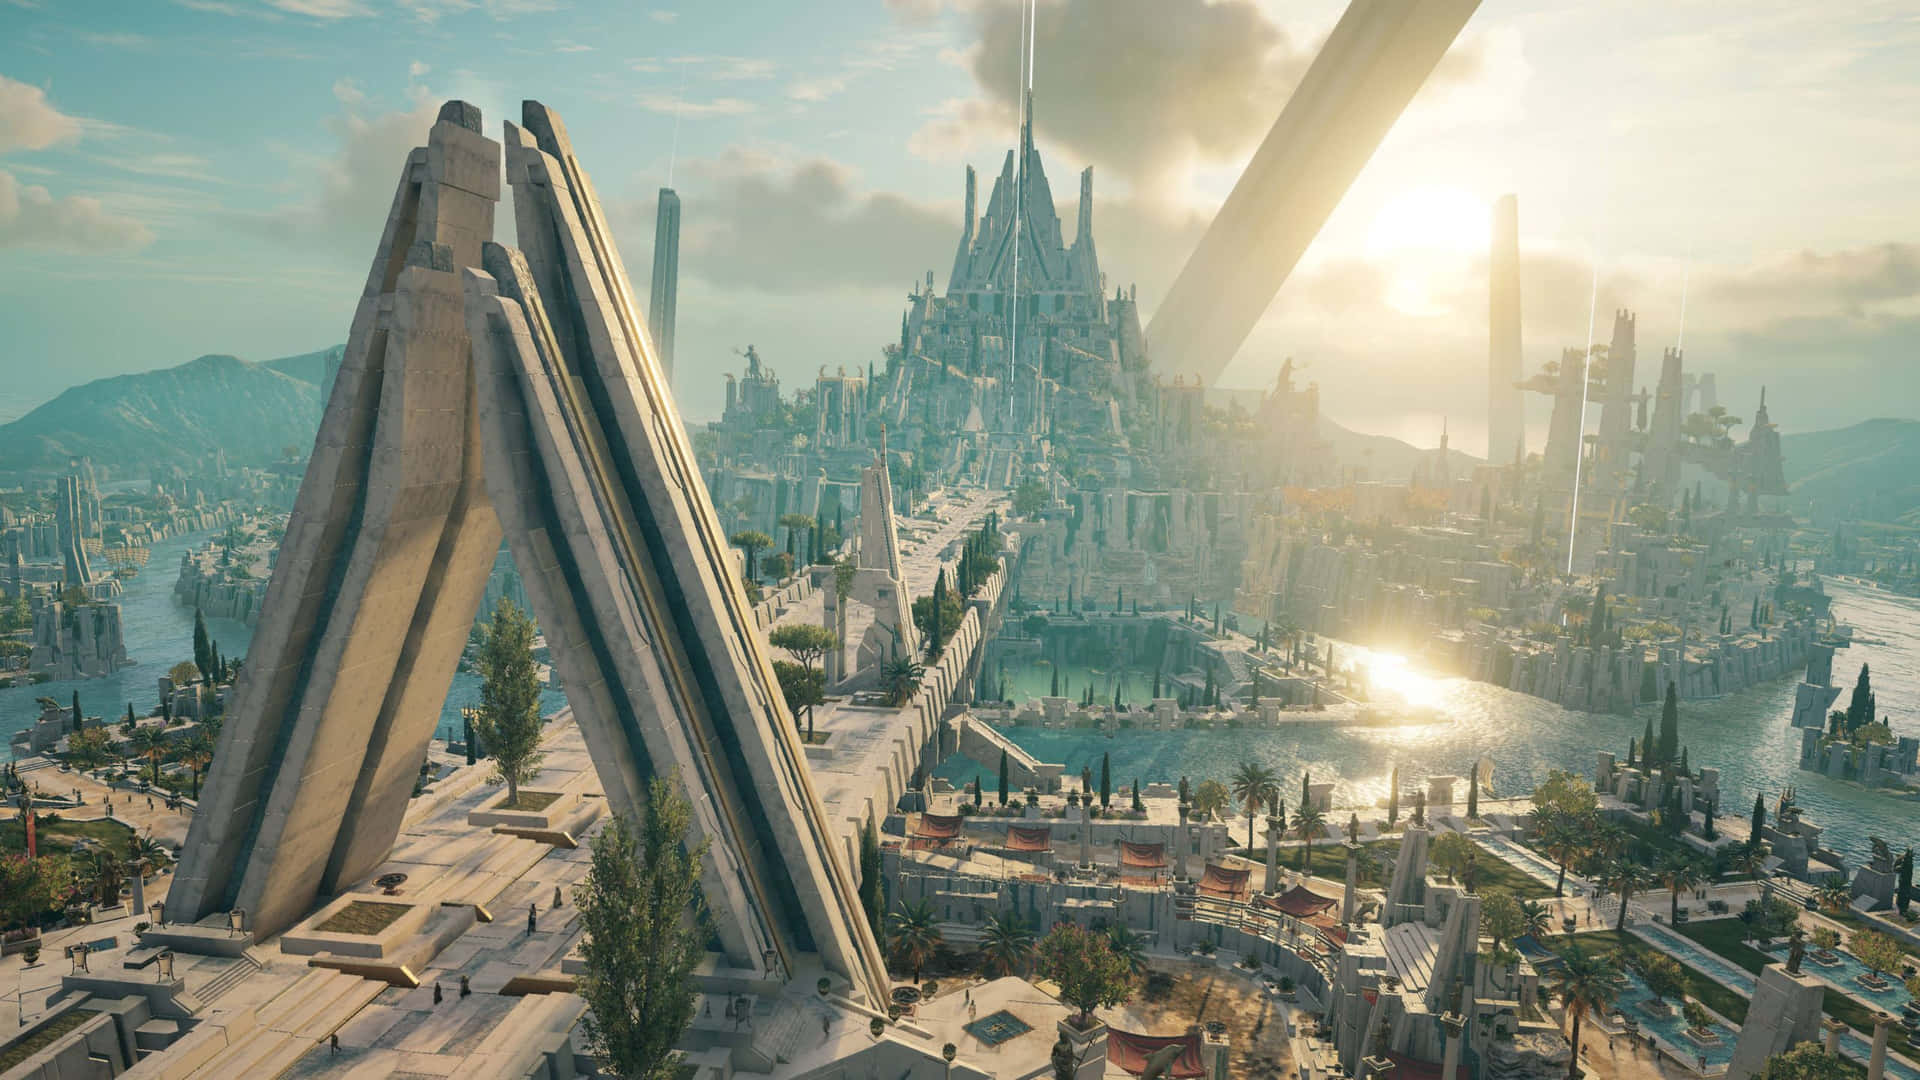 Mountain Of Poseidon 1440p Assassin's Creed Odyssey Background